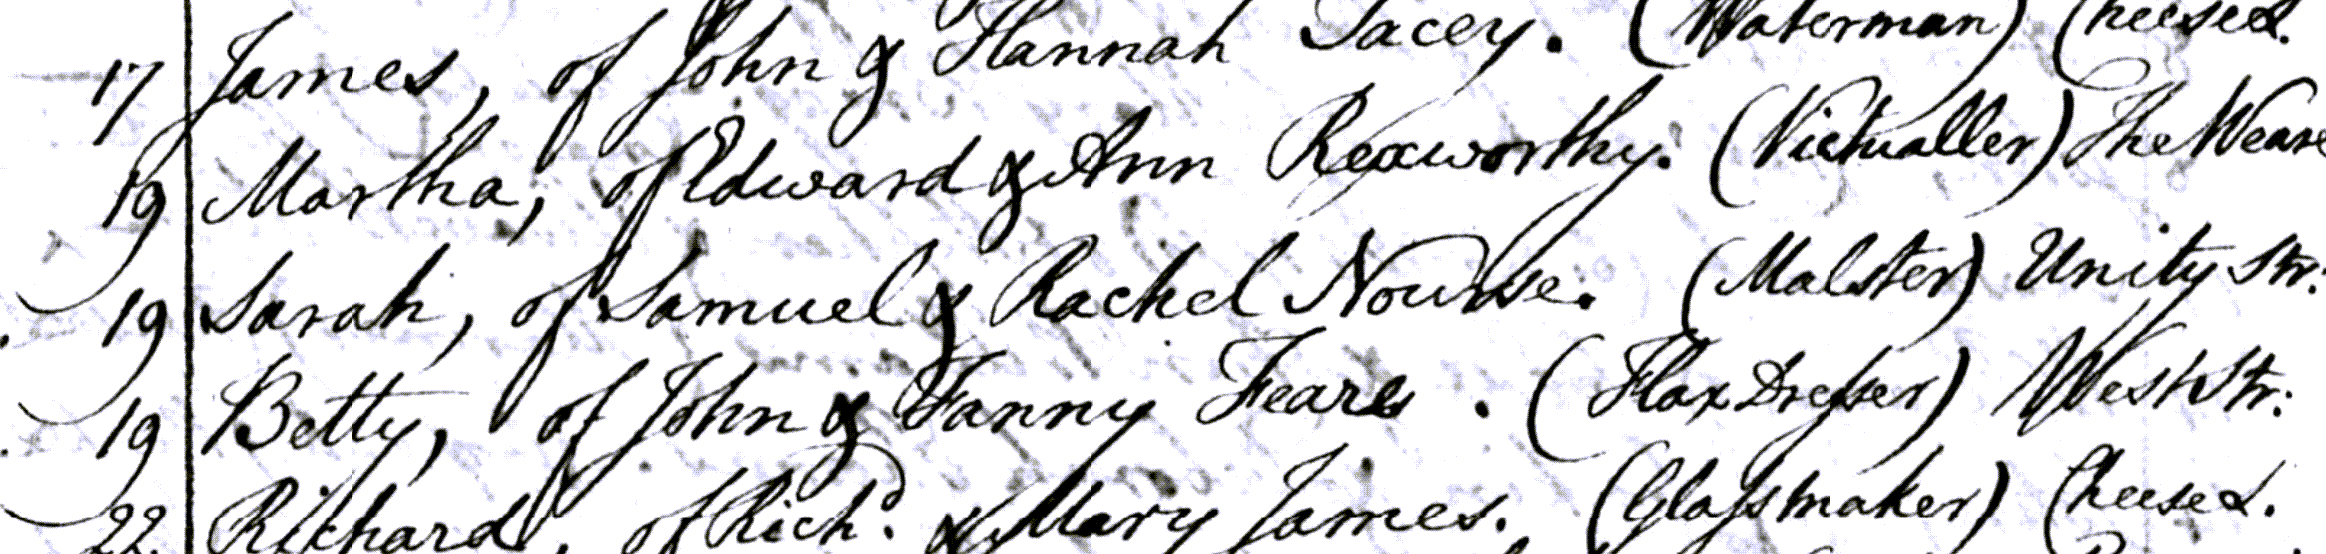 Figure 2: The Baptism Register entry for Sarah Nourse, daughter of Samuel and Rachel